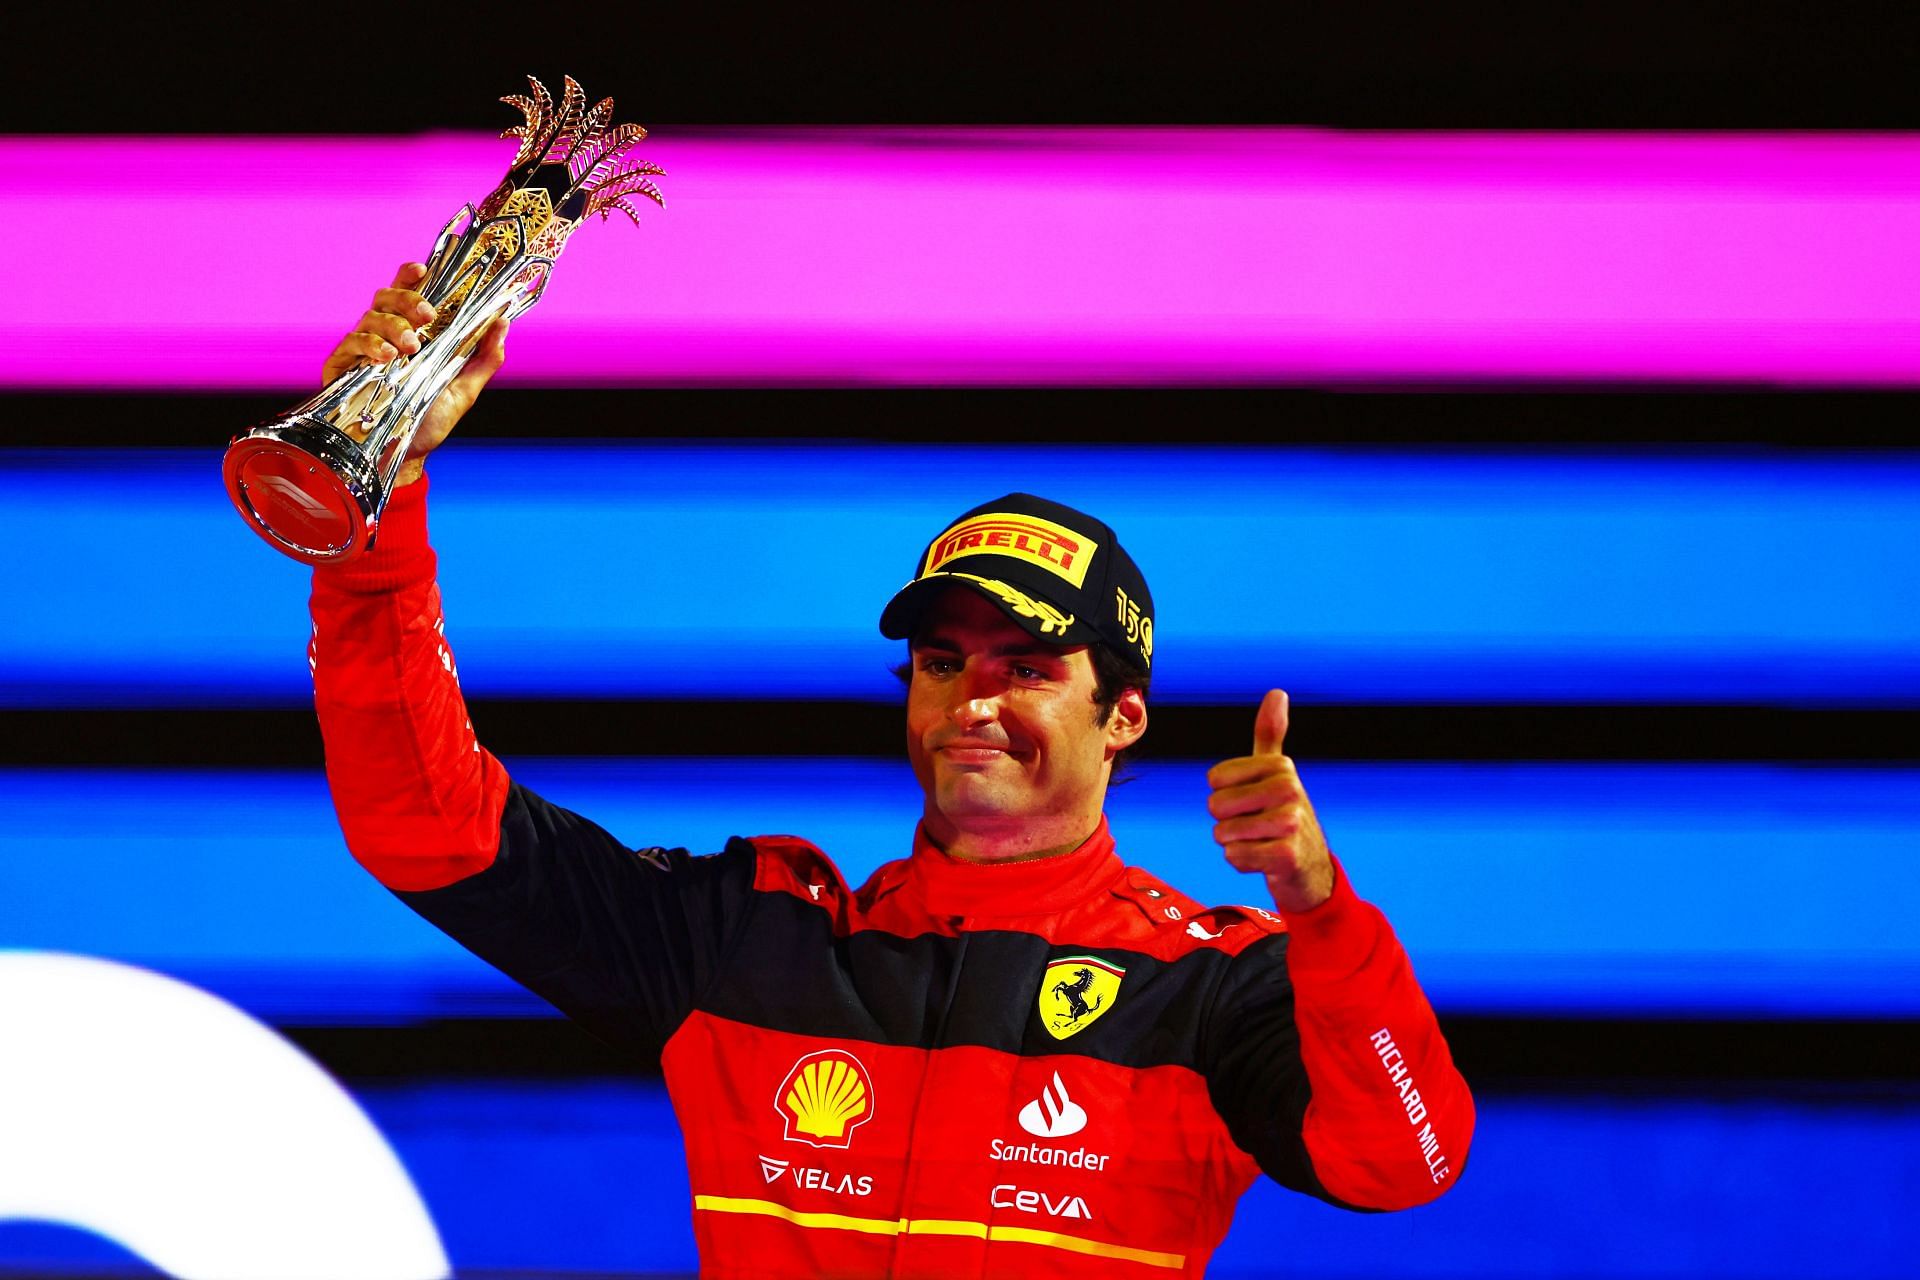 Carlos Sainz took his third consecutive podium at the Saudi Arabian GP last weekend